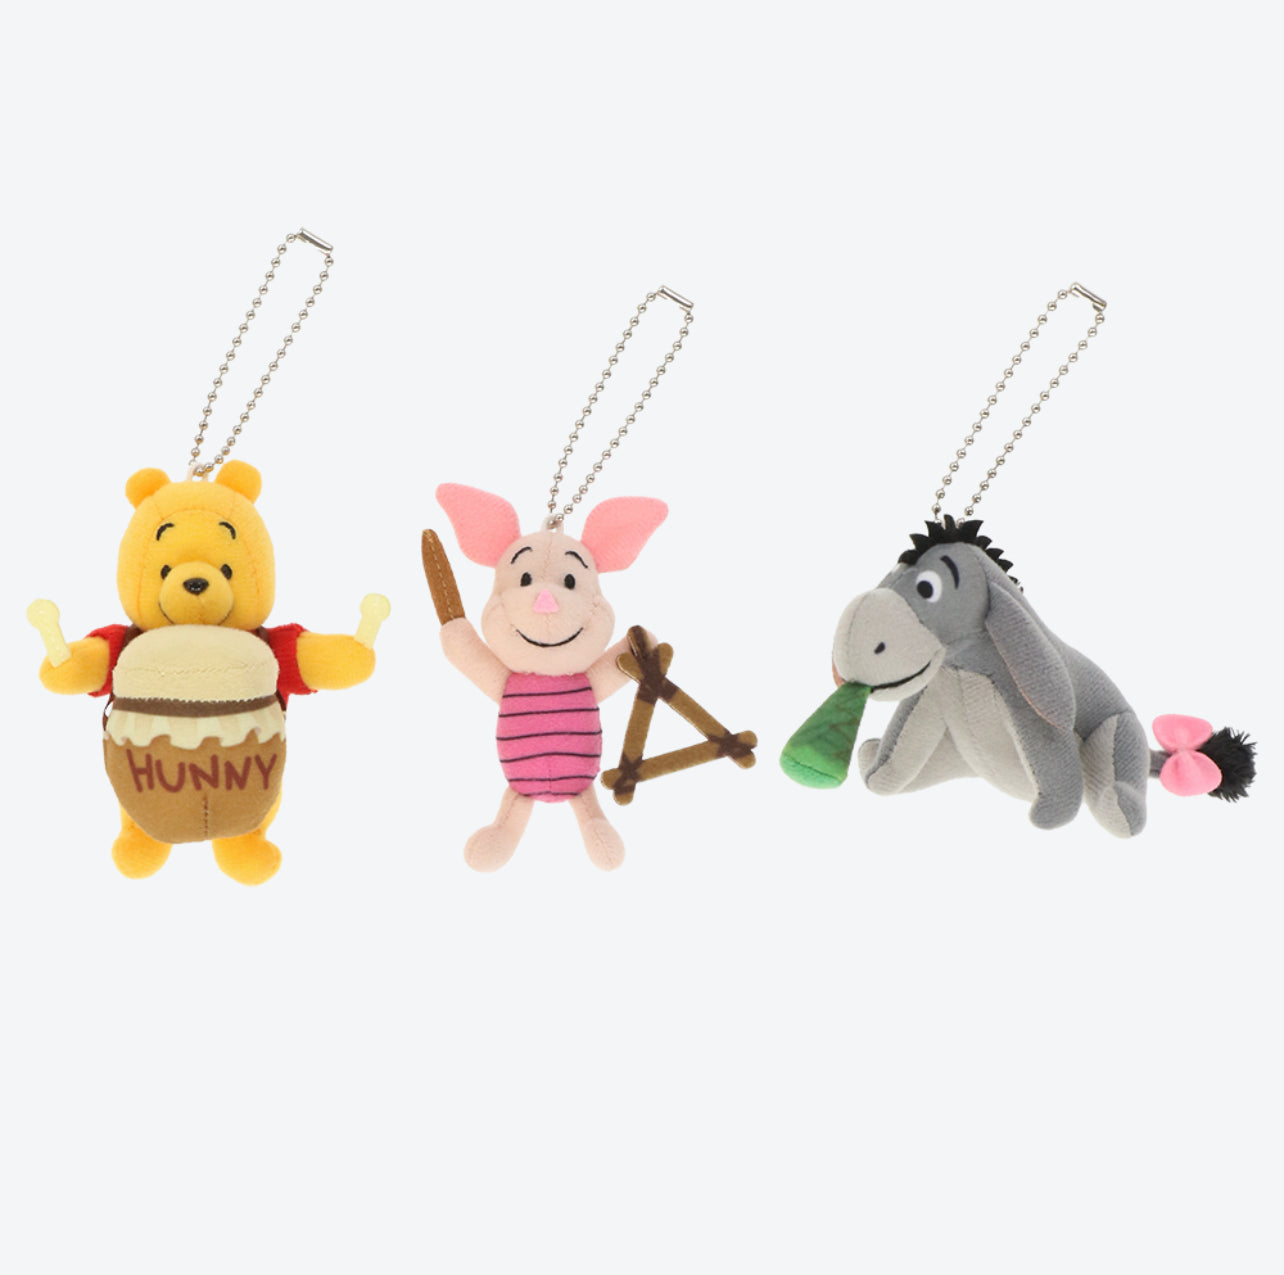 TDR - Winnie the Pooh, Piglet & Eeyore "Musical Instruments" Plush Keychains Set (Release Date: Jun 22)